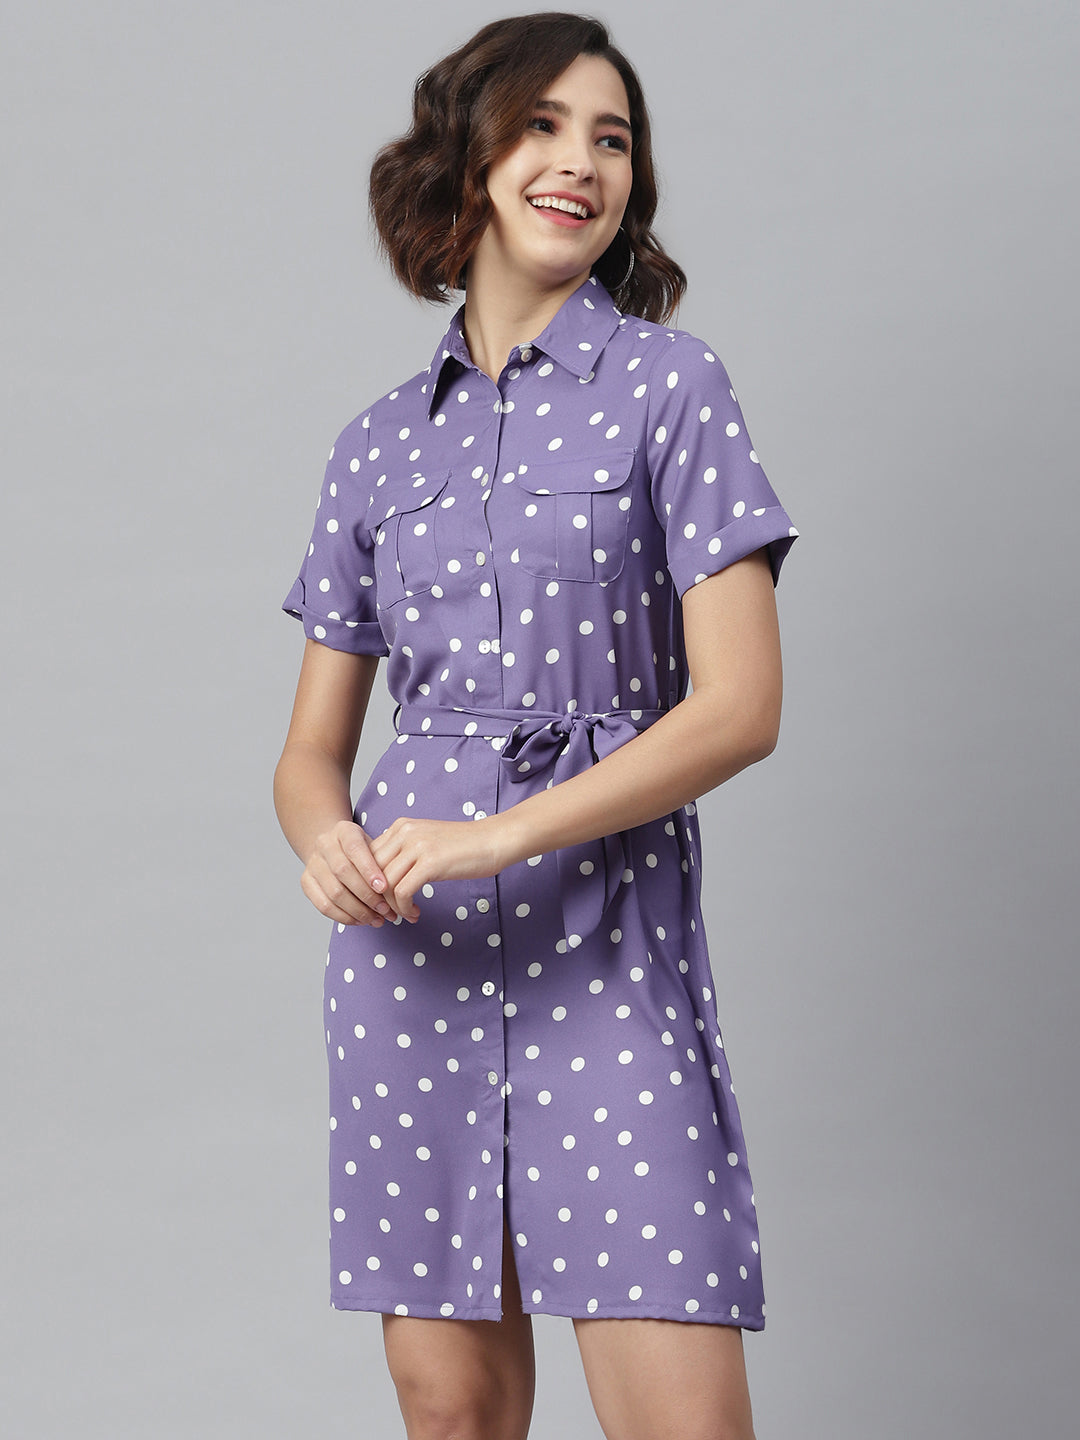 Women's Lavender Polka Shirt Dress with belt